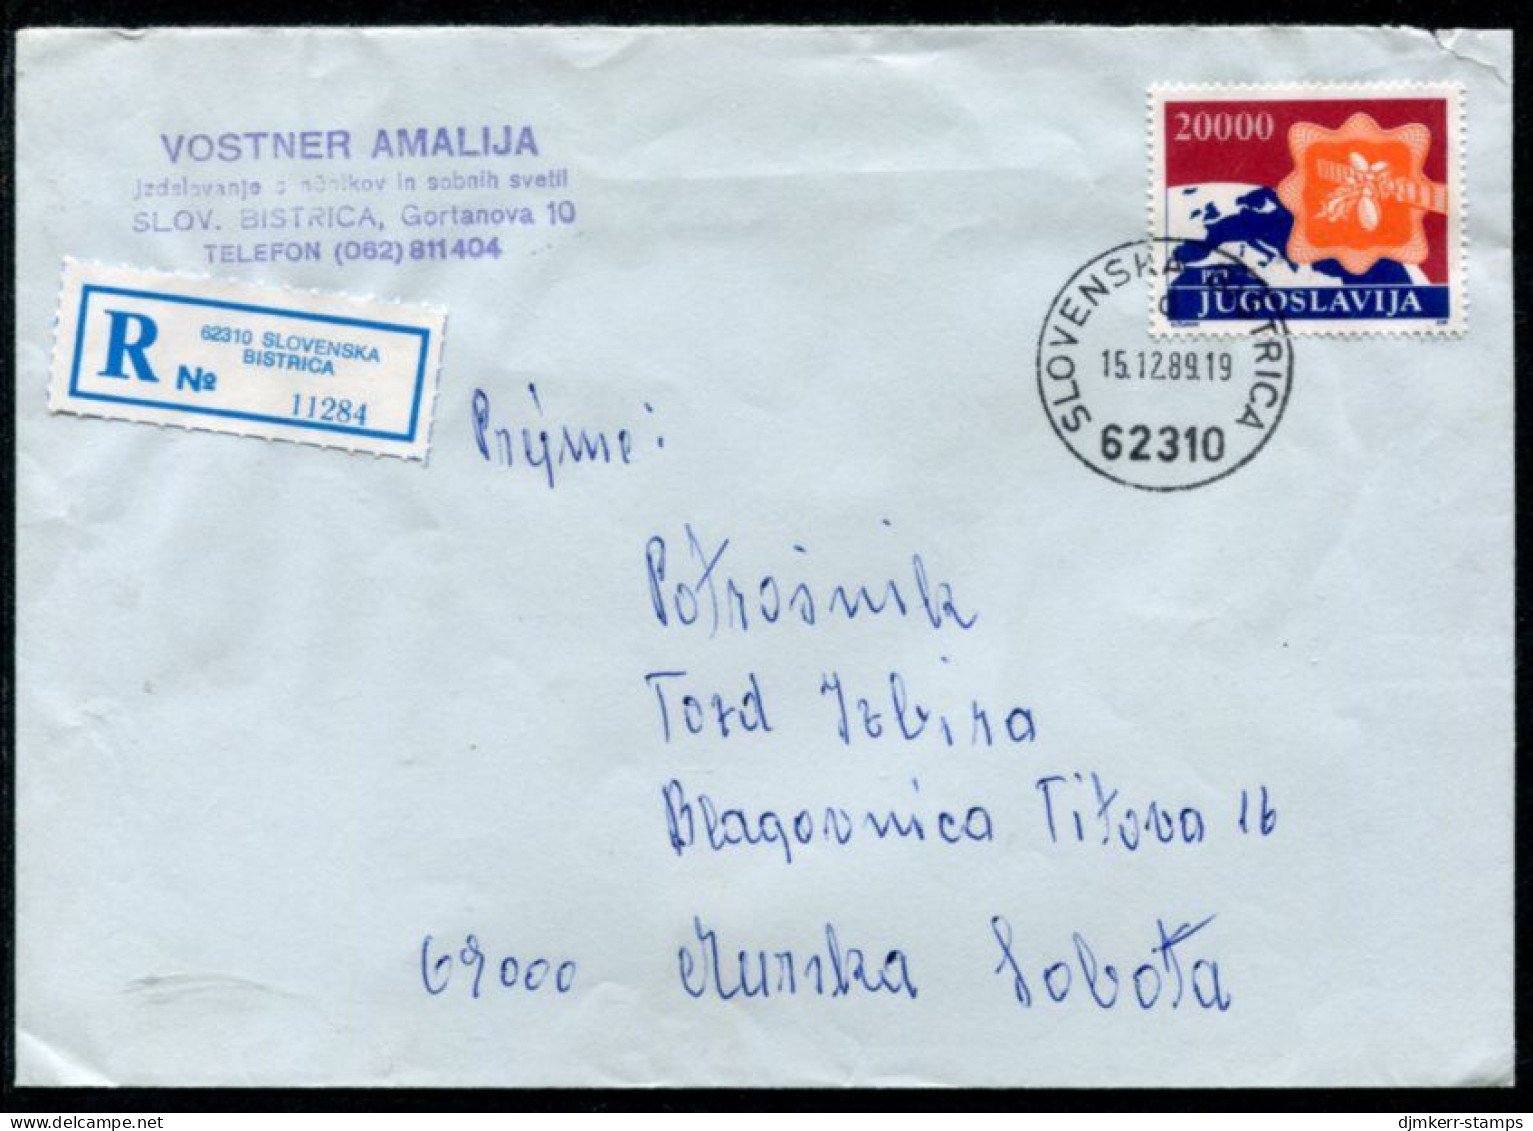 YUGOSLAVIA 1989 Registered Cover Franked With Postal Services 20000 D Single Franking    Michel 2362 - Briefe U. Dokumente